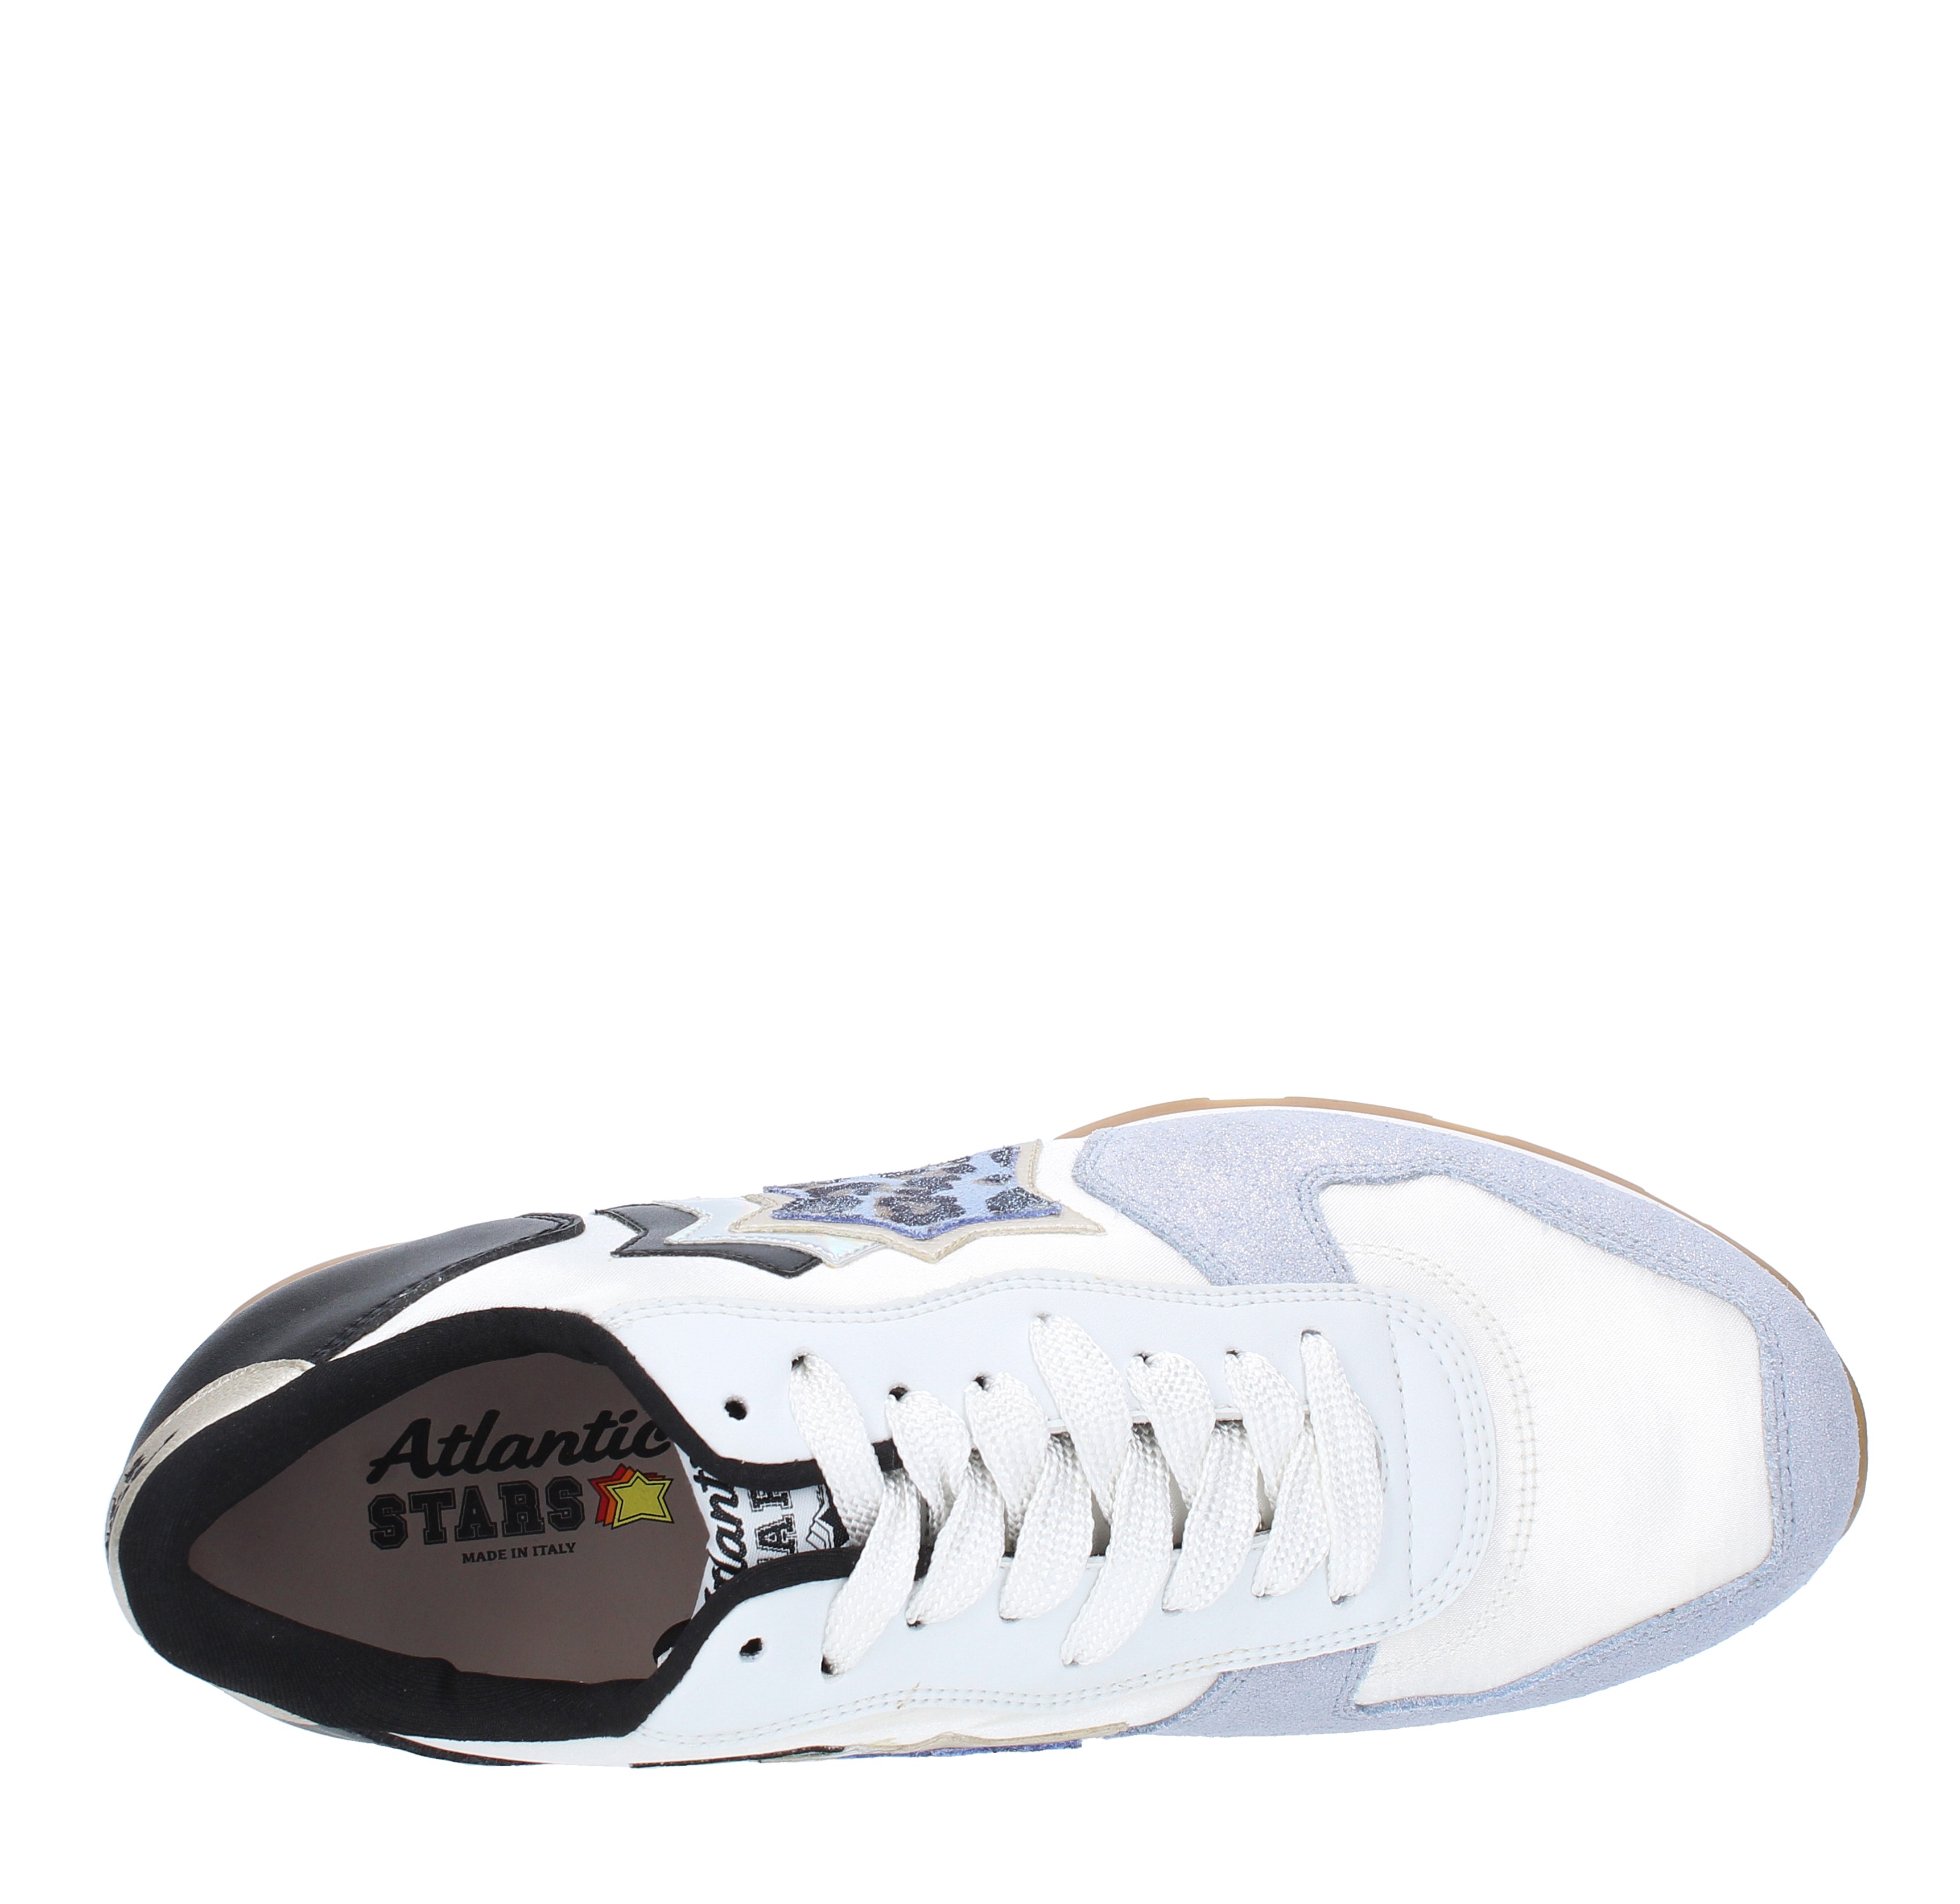 Sneakers in suede, leather and fabric ATLANTIC STARS | VEGA ABLB BT56BLU AZZURRO